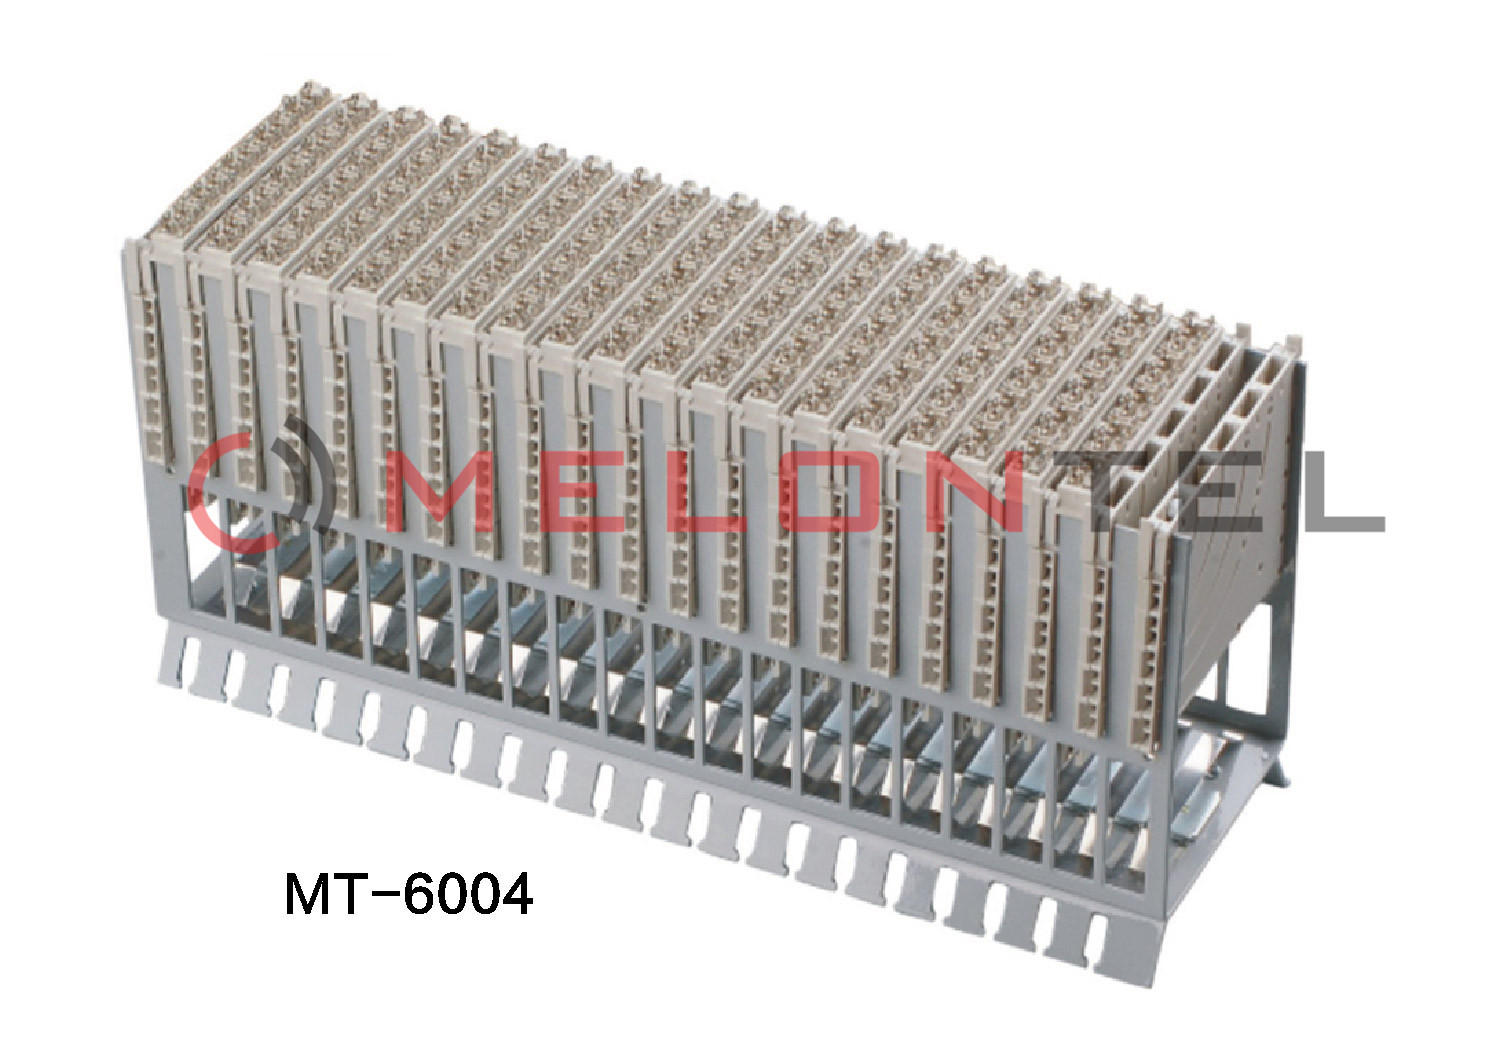 Best 100 Pair MDF Terminal Block MDF 7100 -100 Siemens With 5 Pair Protector Over - Voltage wholesale